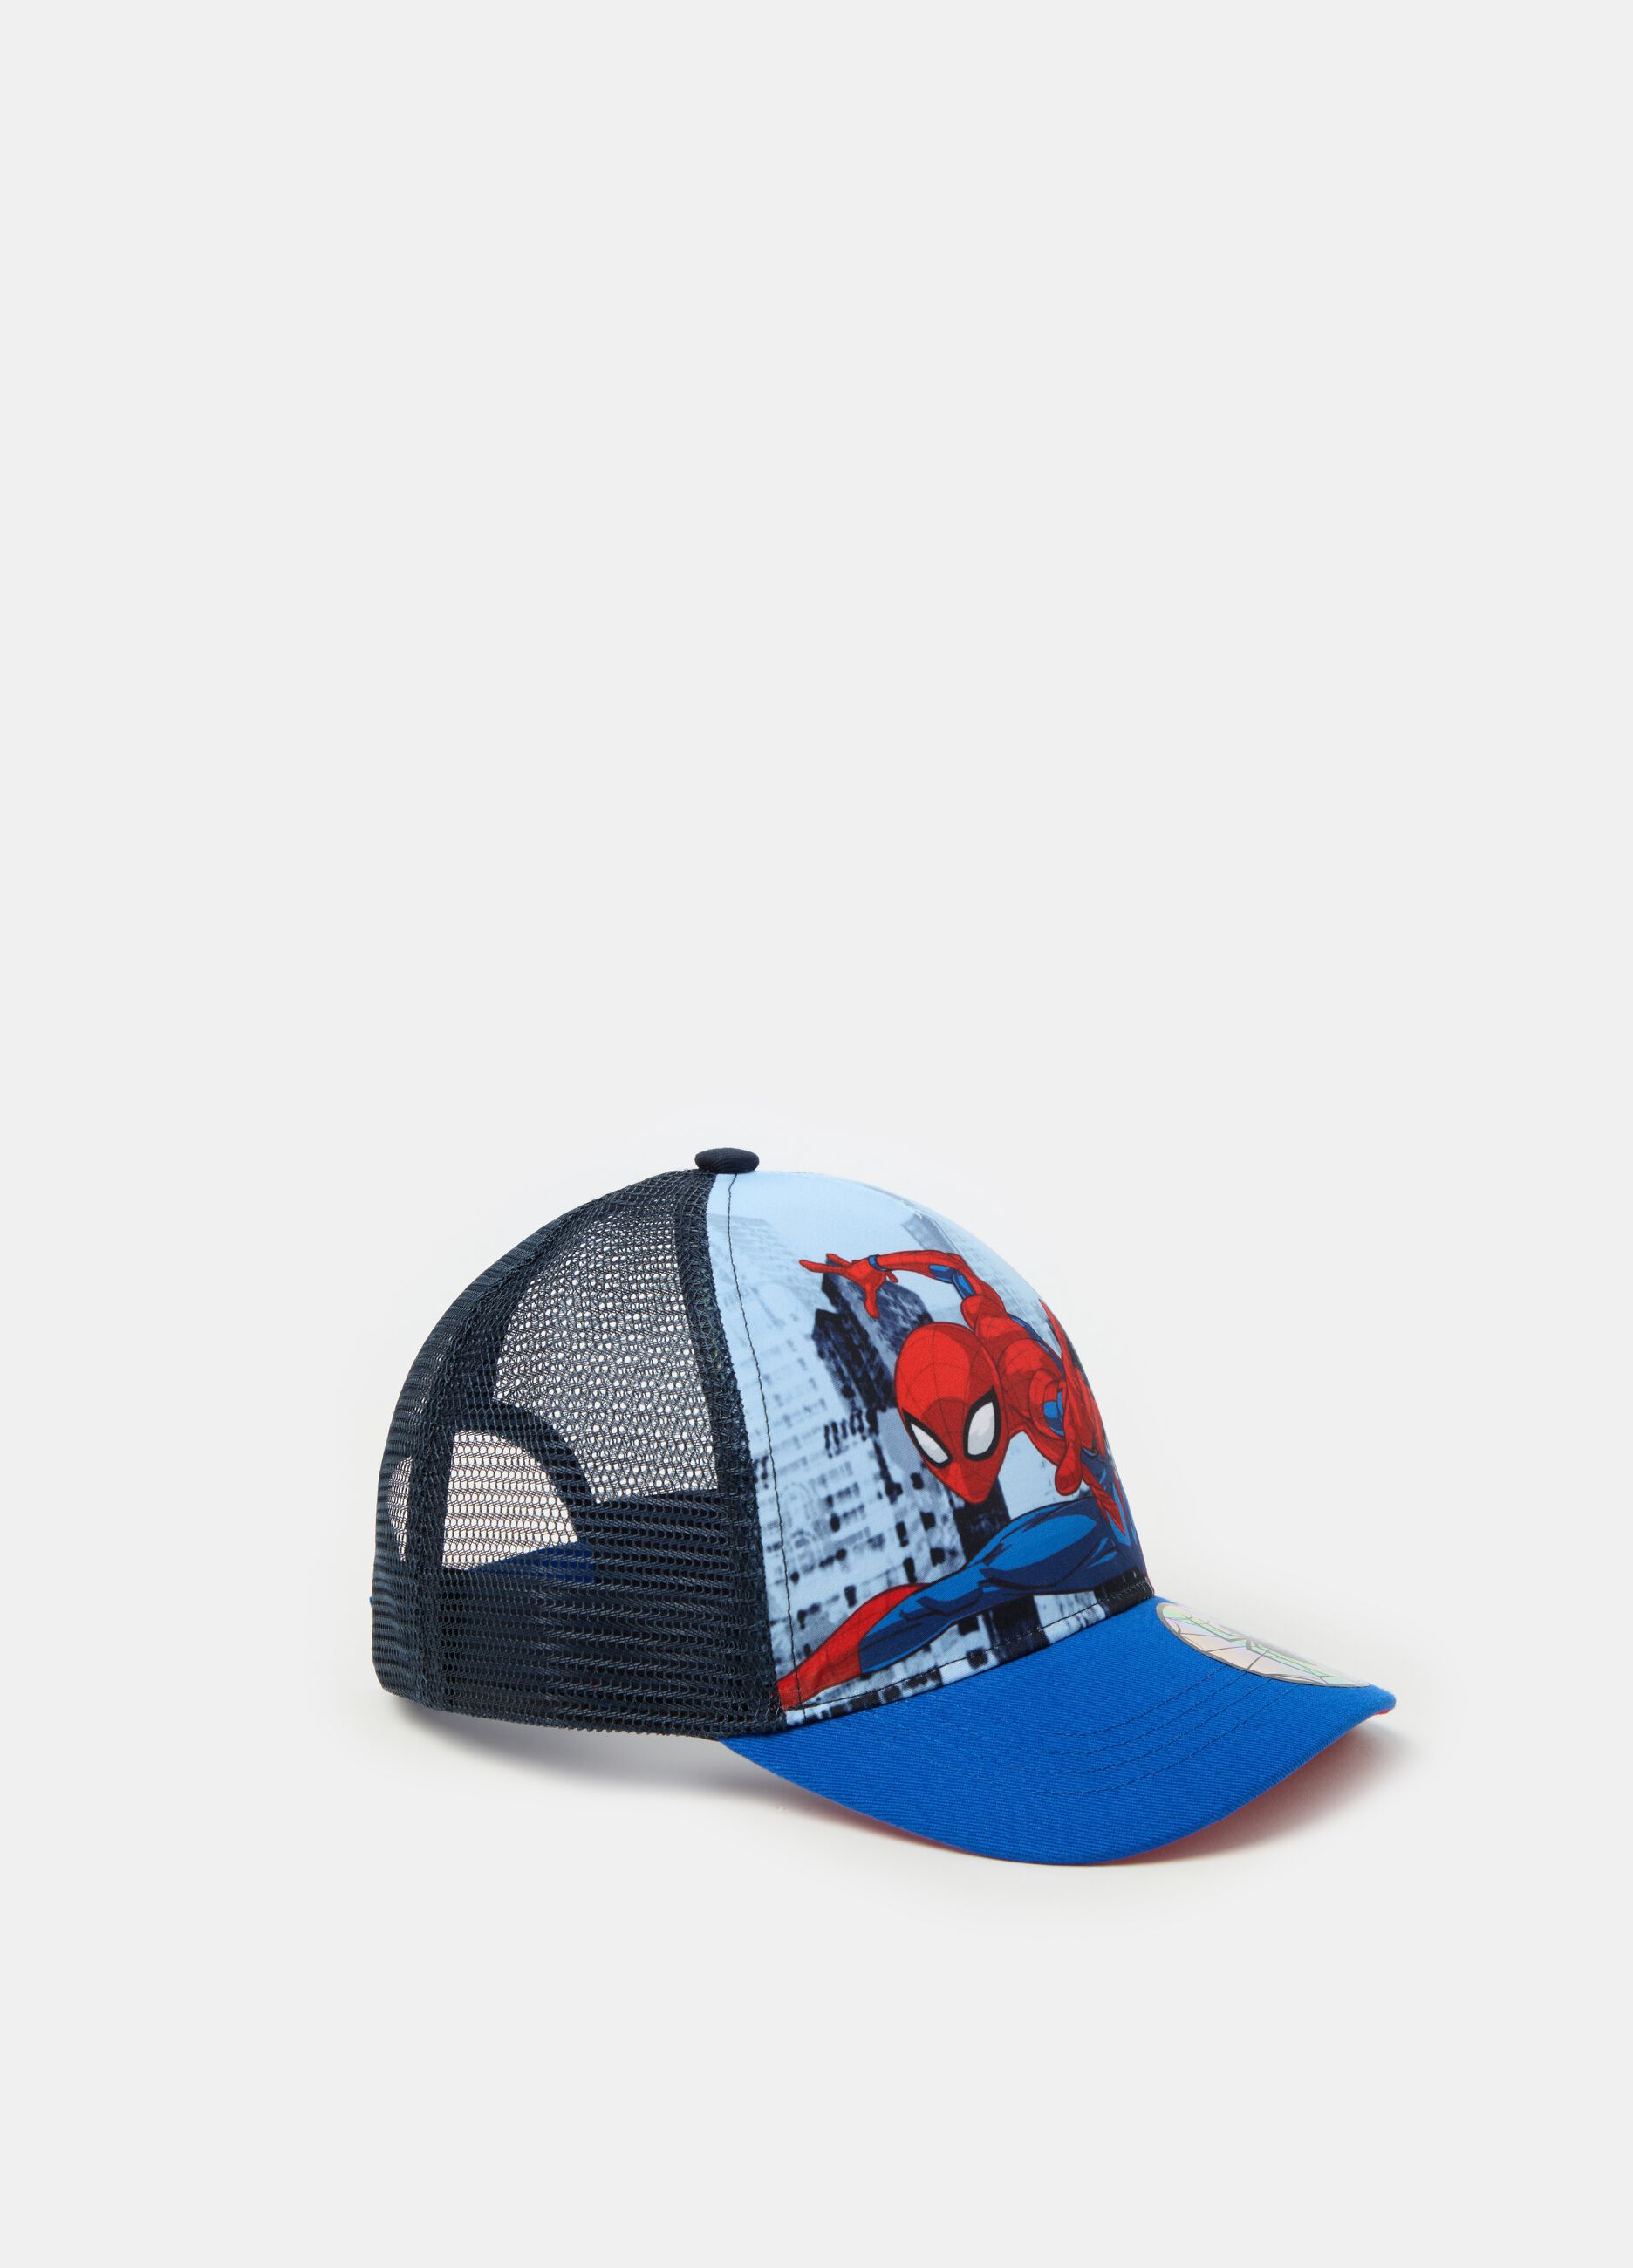 Spider-Man baseball cap